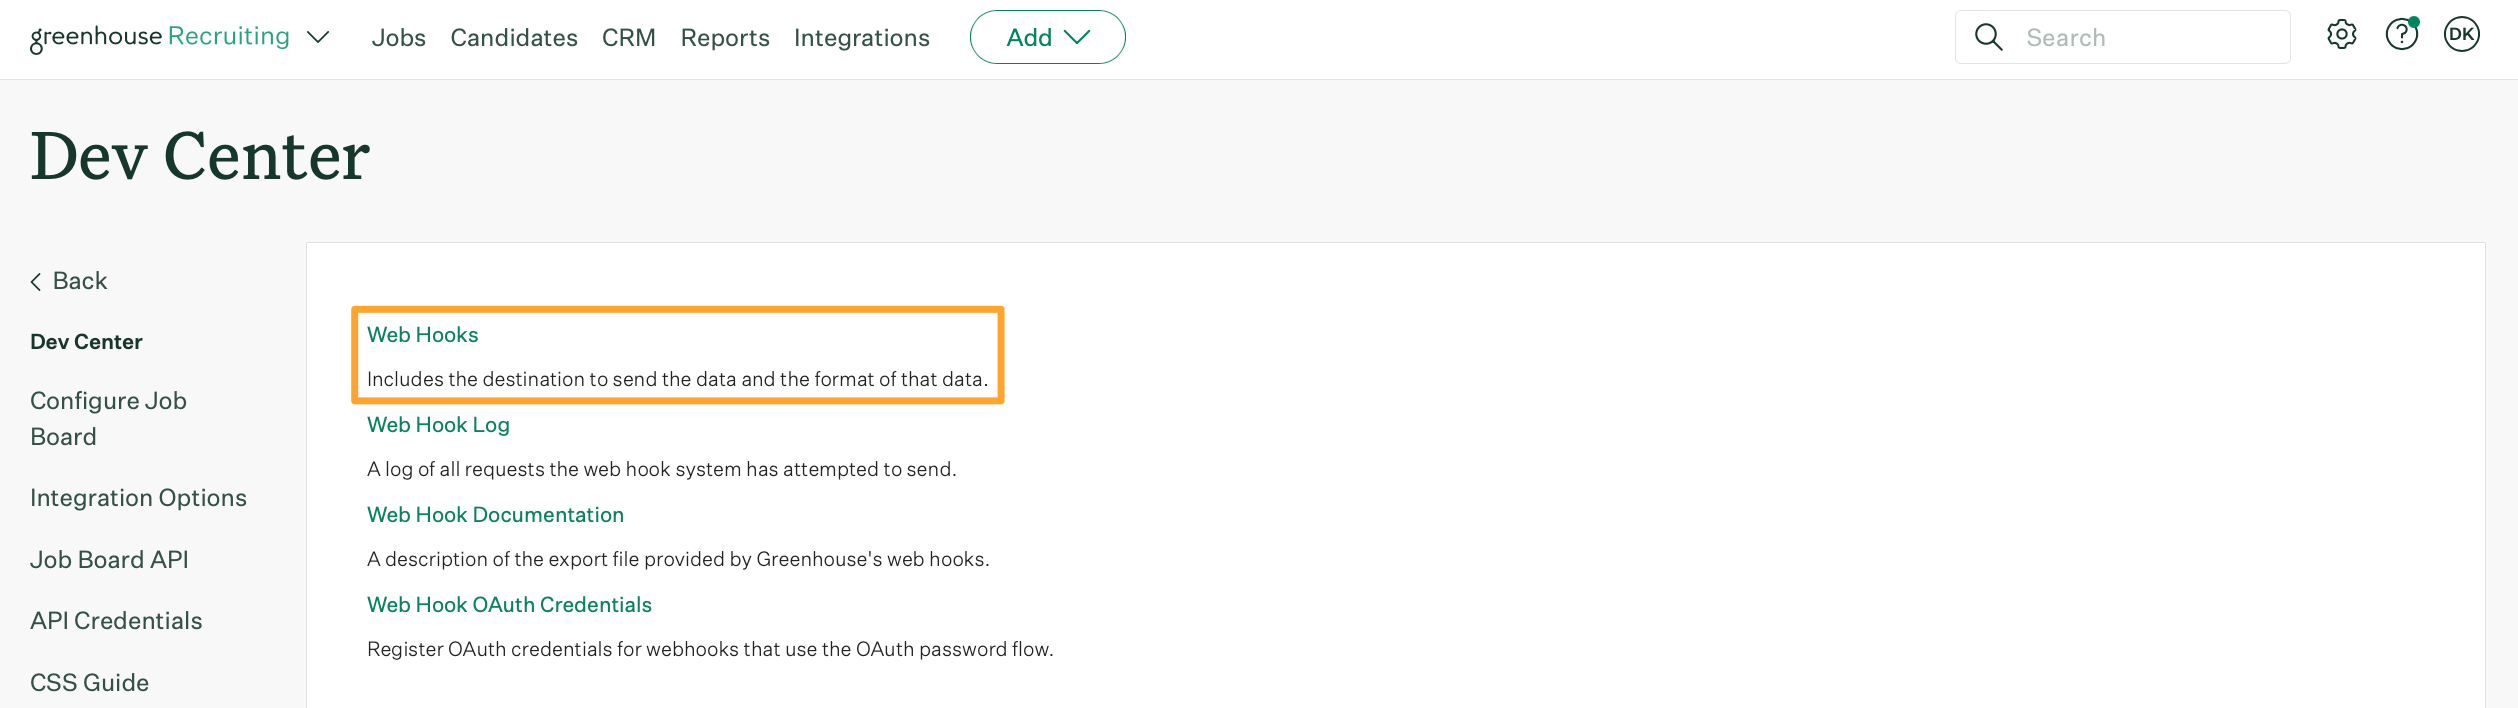 Web Hooks page shows marigold emphasis box around web hooks button